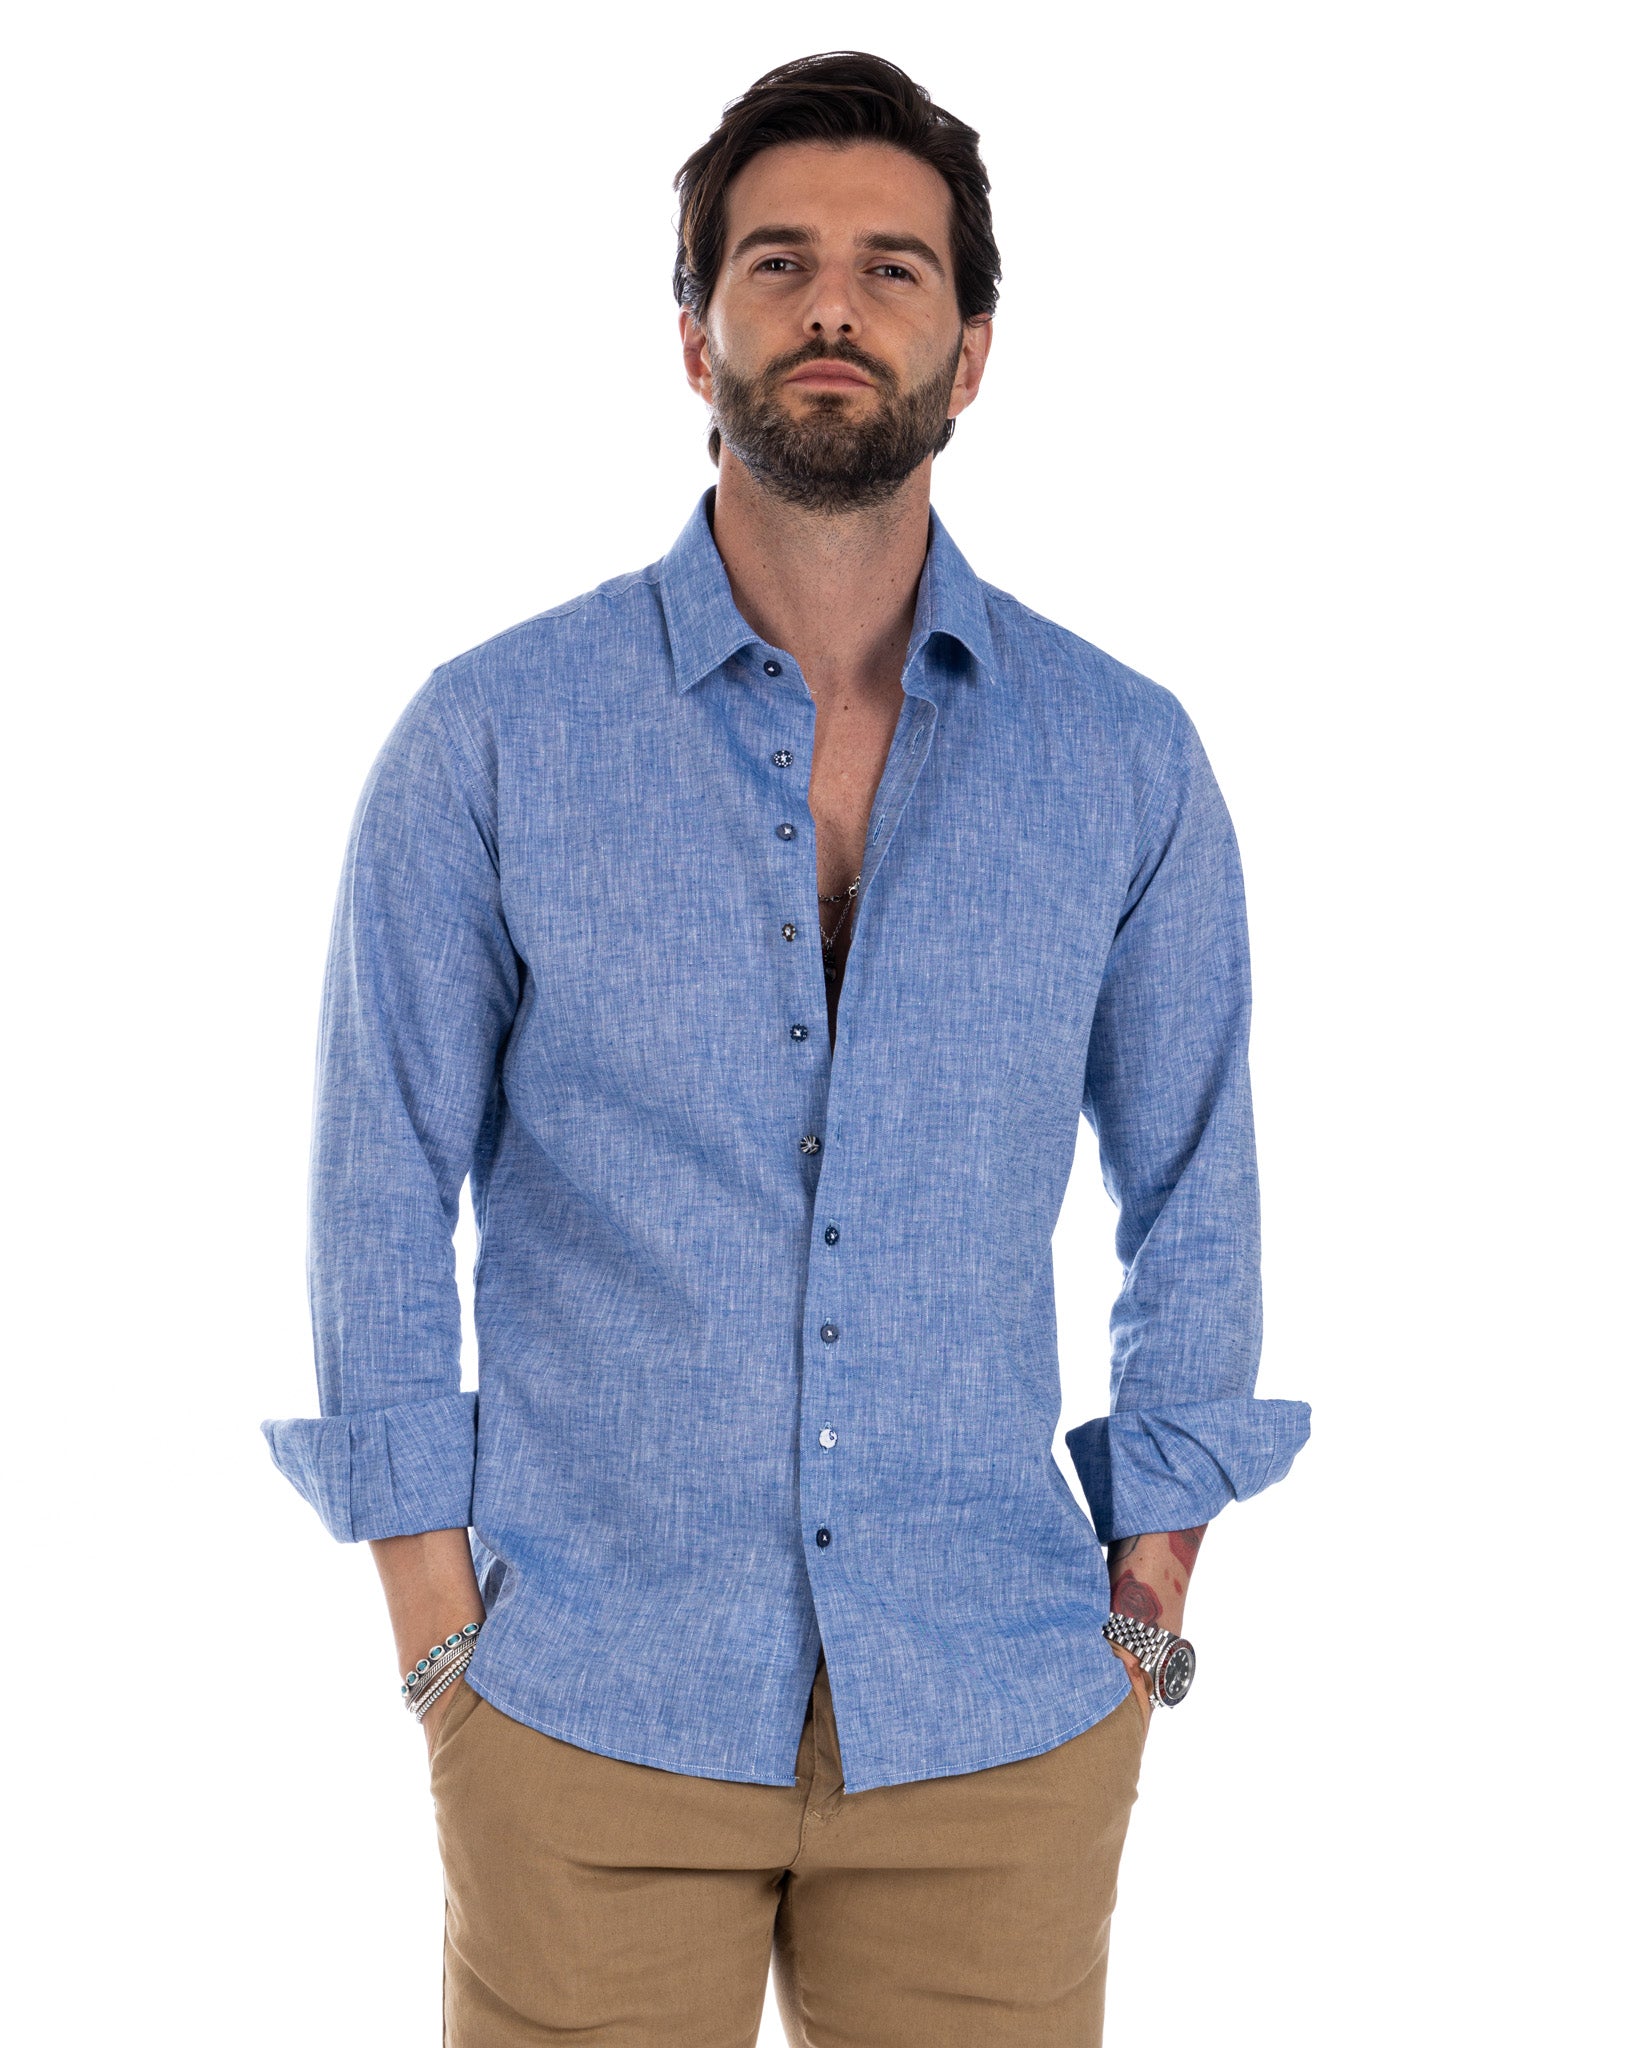 Praiano - chemise française en lin denim